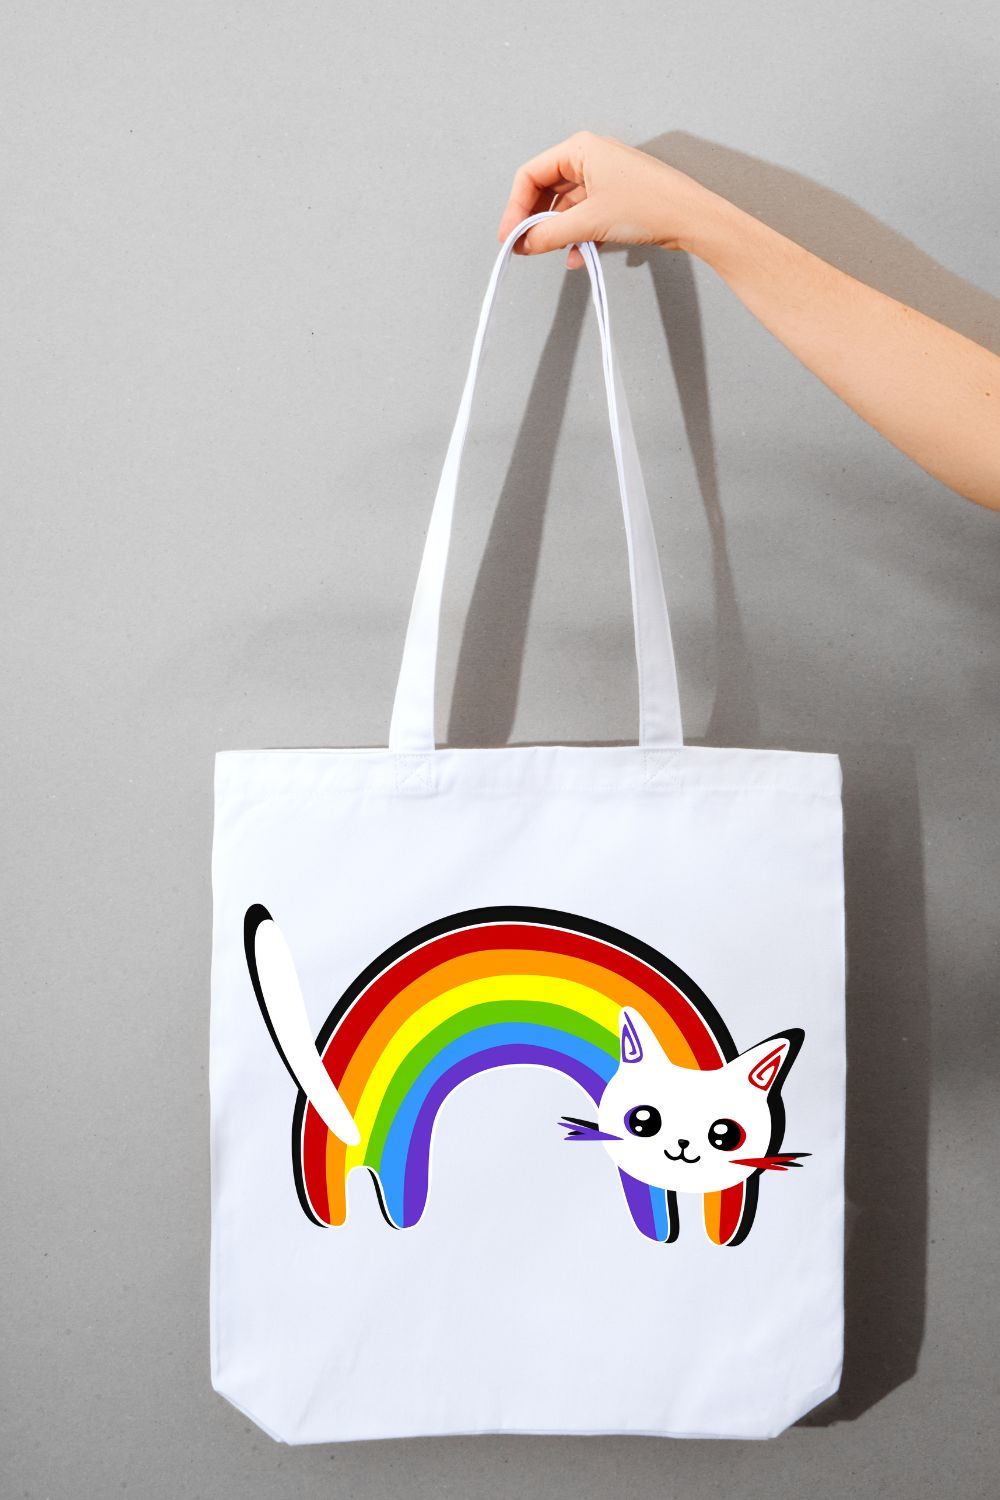 Rainbow cat pinterest preview image.